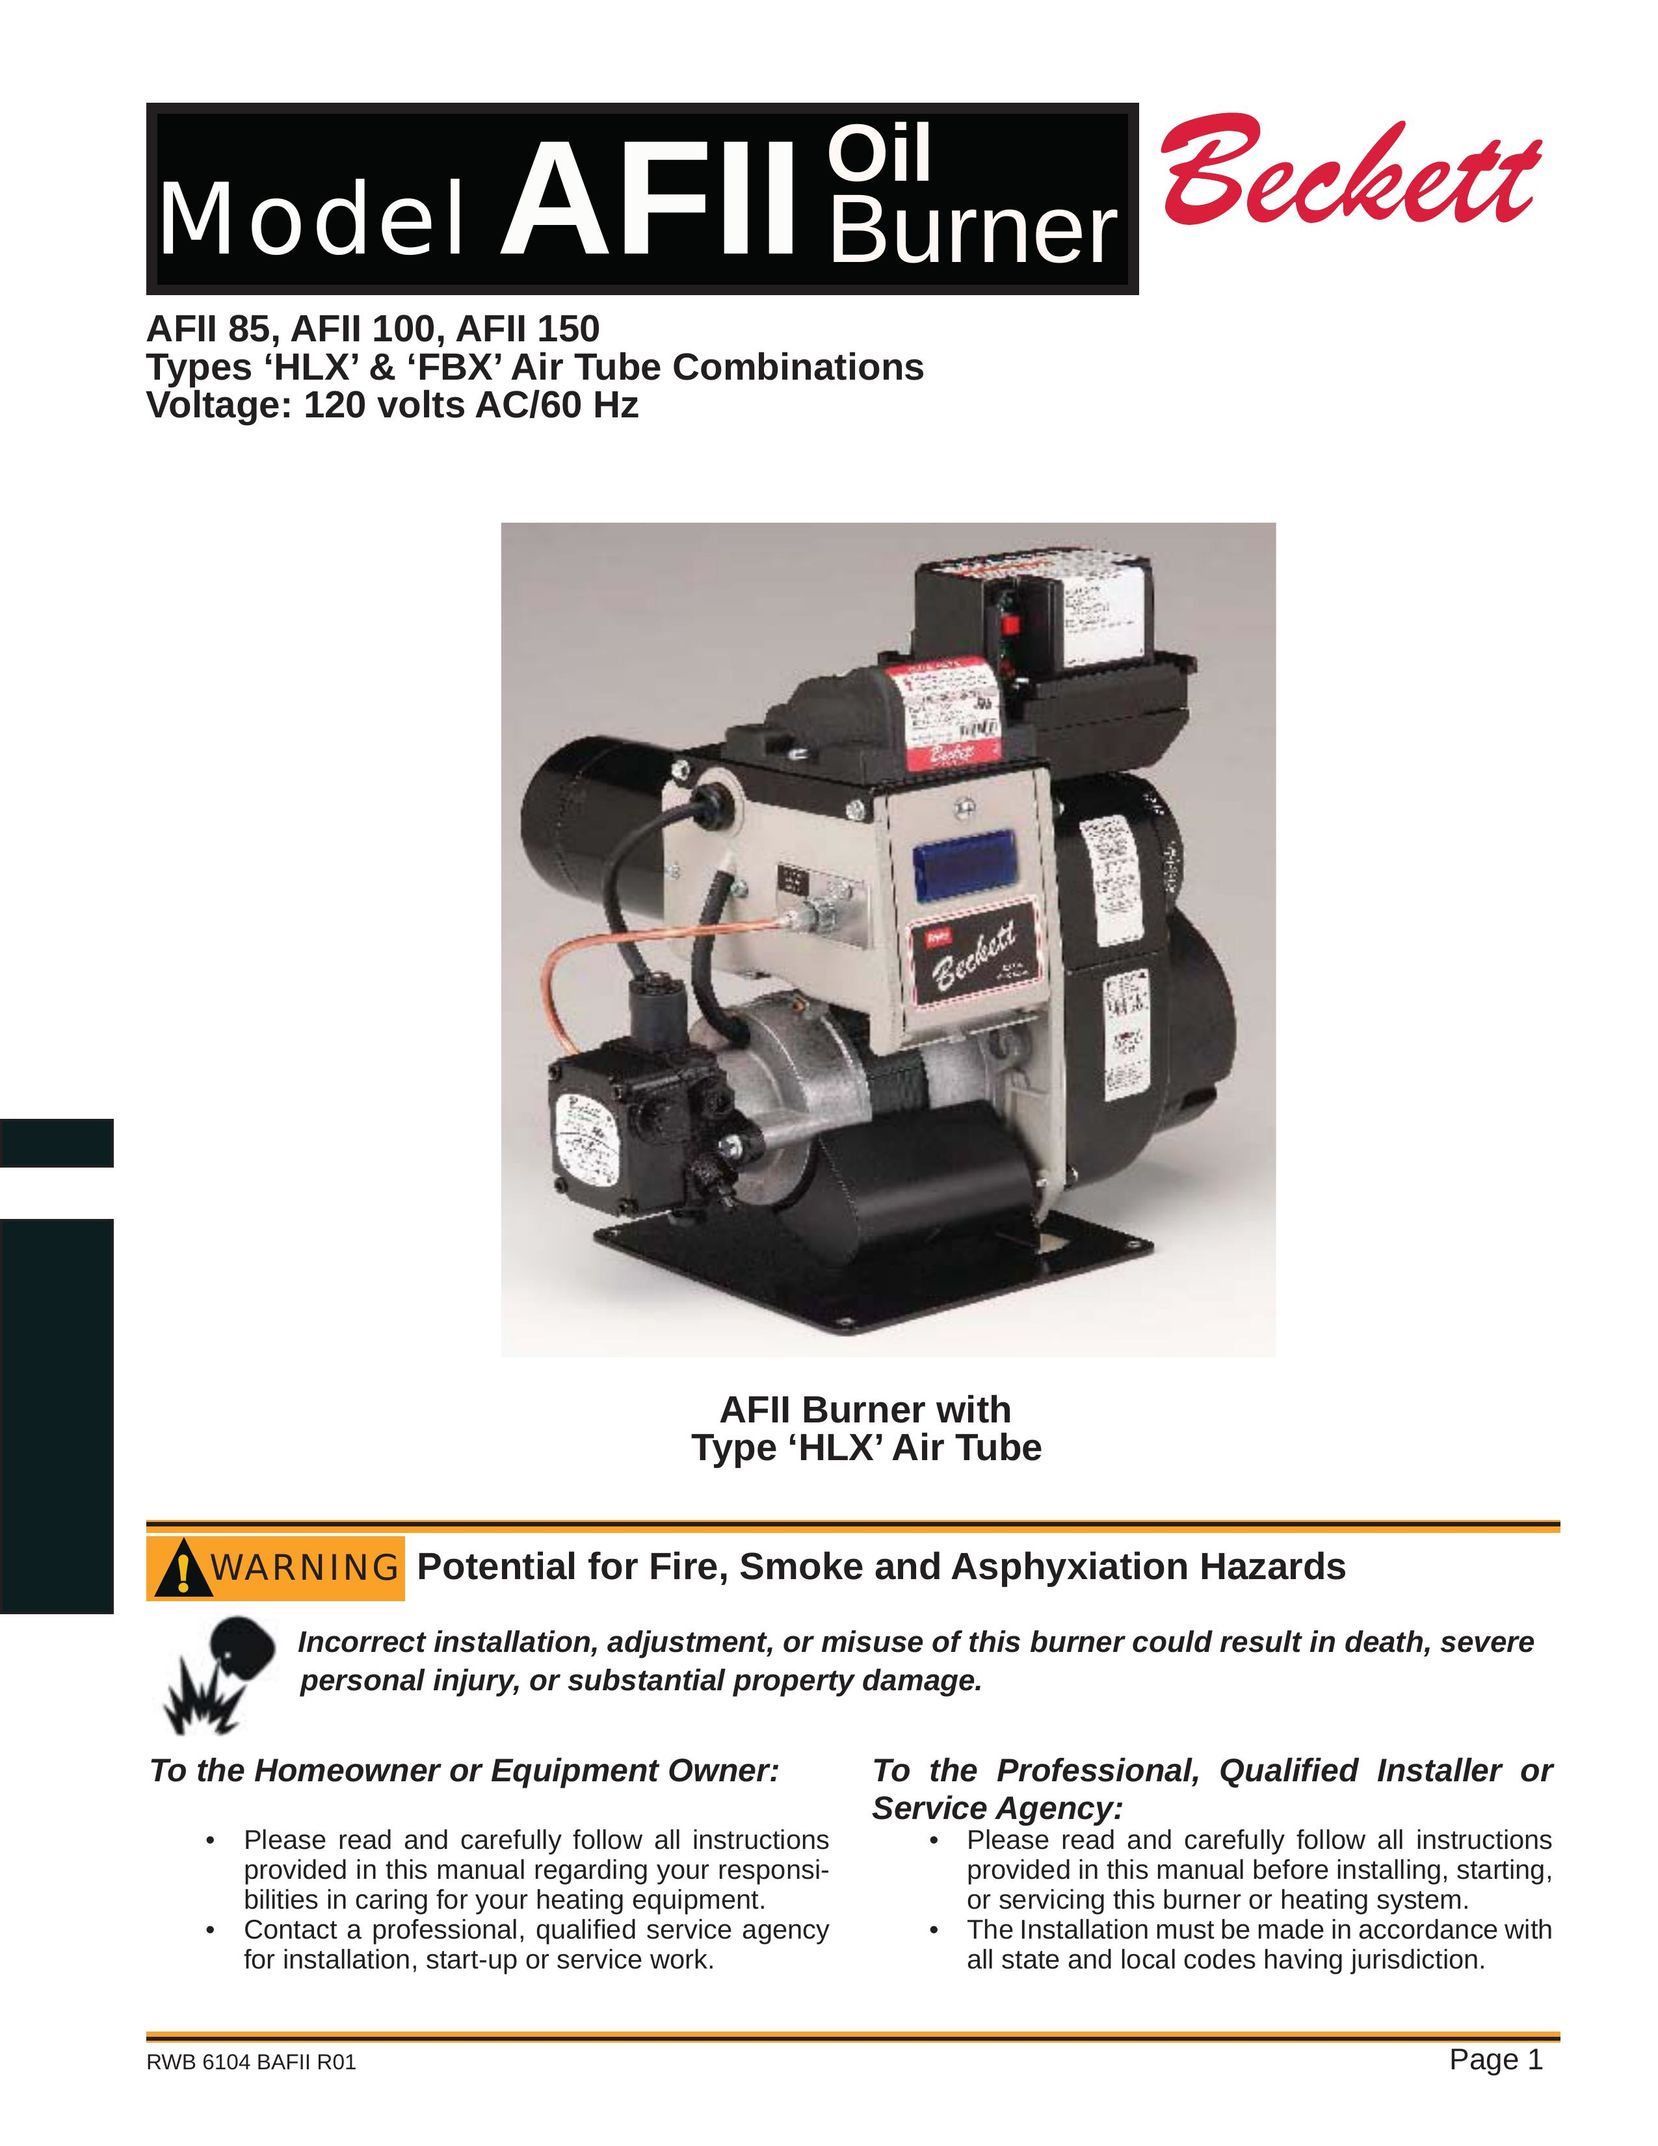 Beckett AFII 150 Burner User Manual